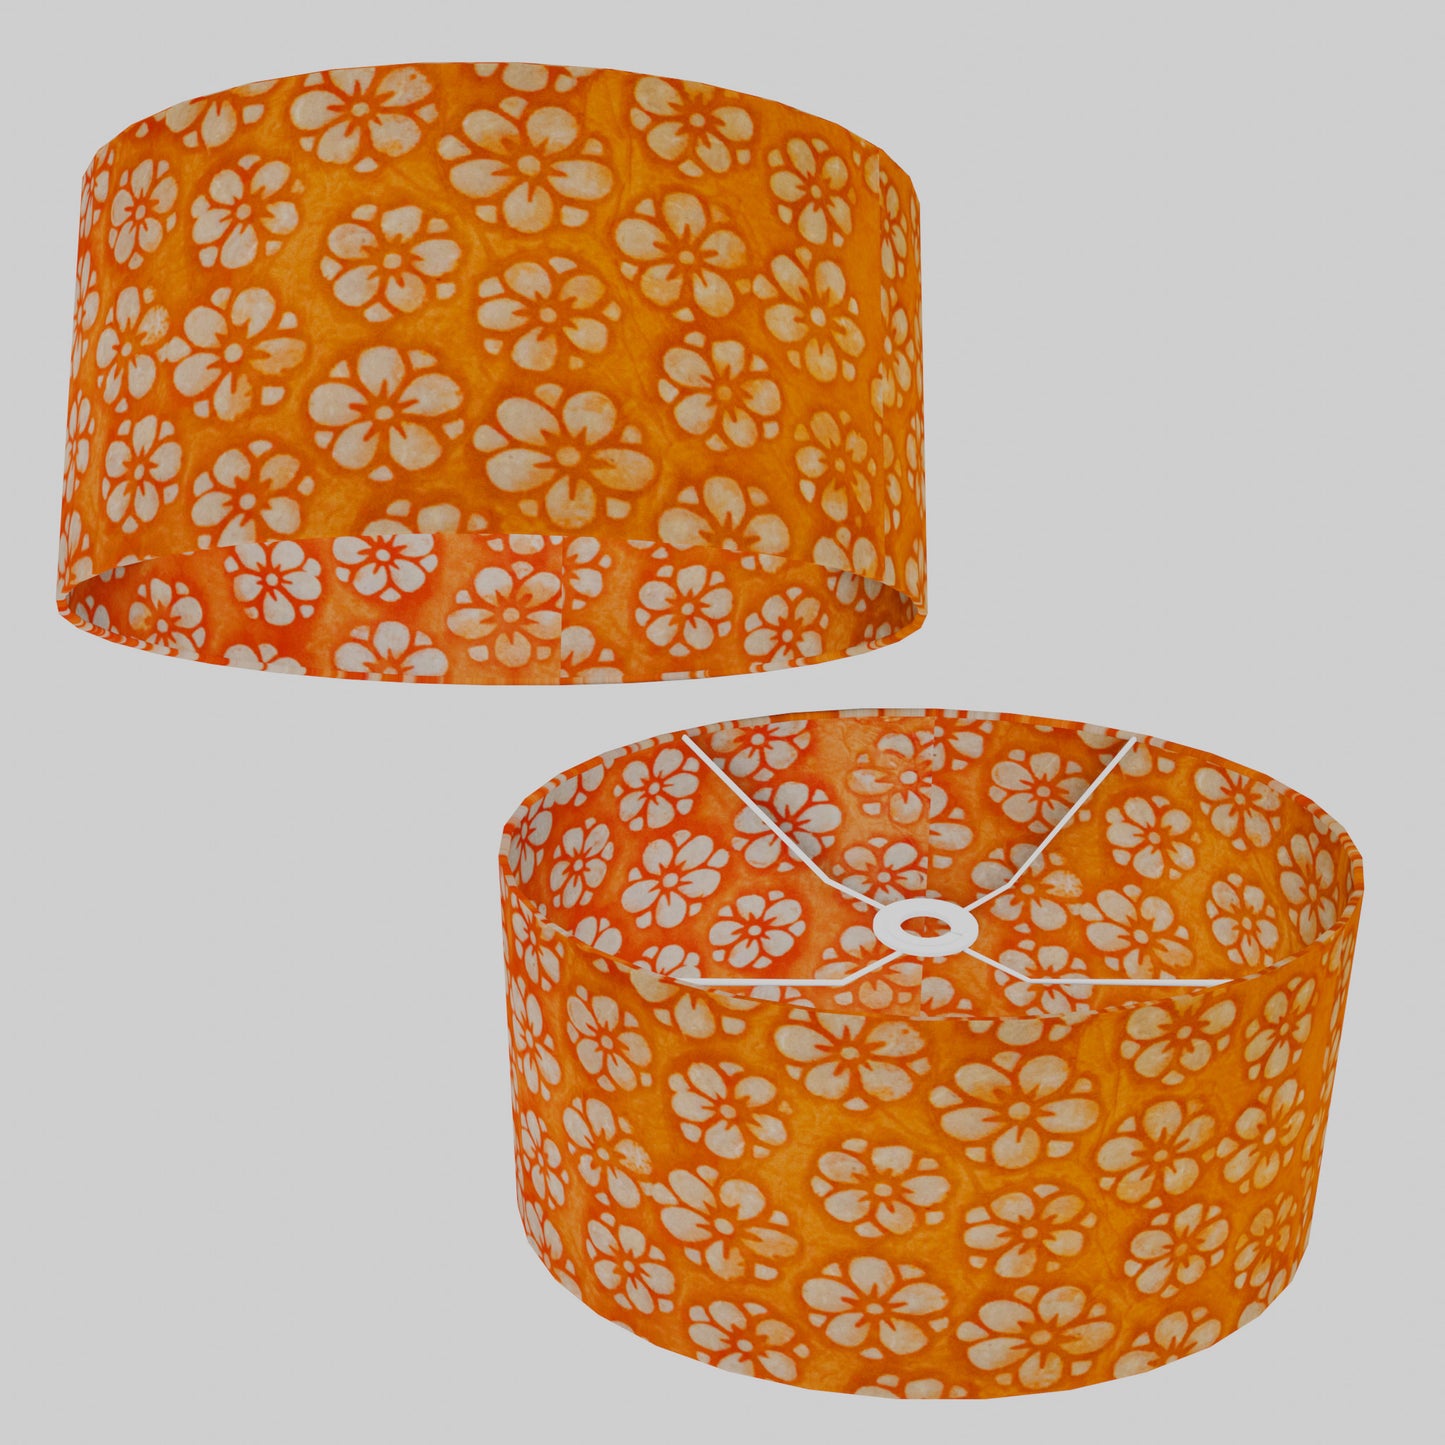 Oval Lamp Shade - P94 - Batik Star Flower on Orange, 40cm(w) x 20cm(h) x 30cm(d)